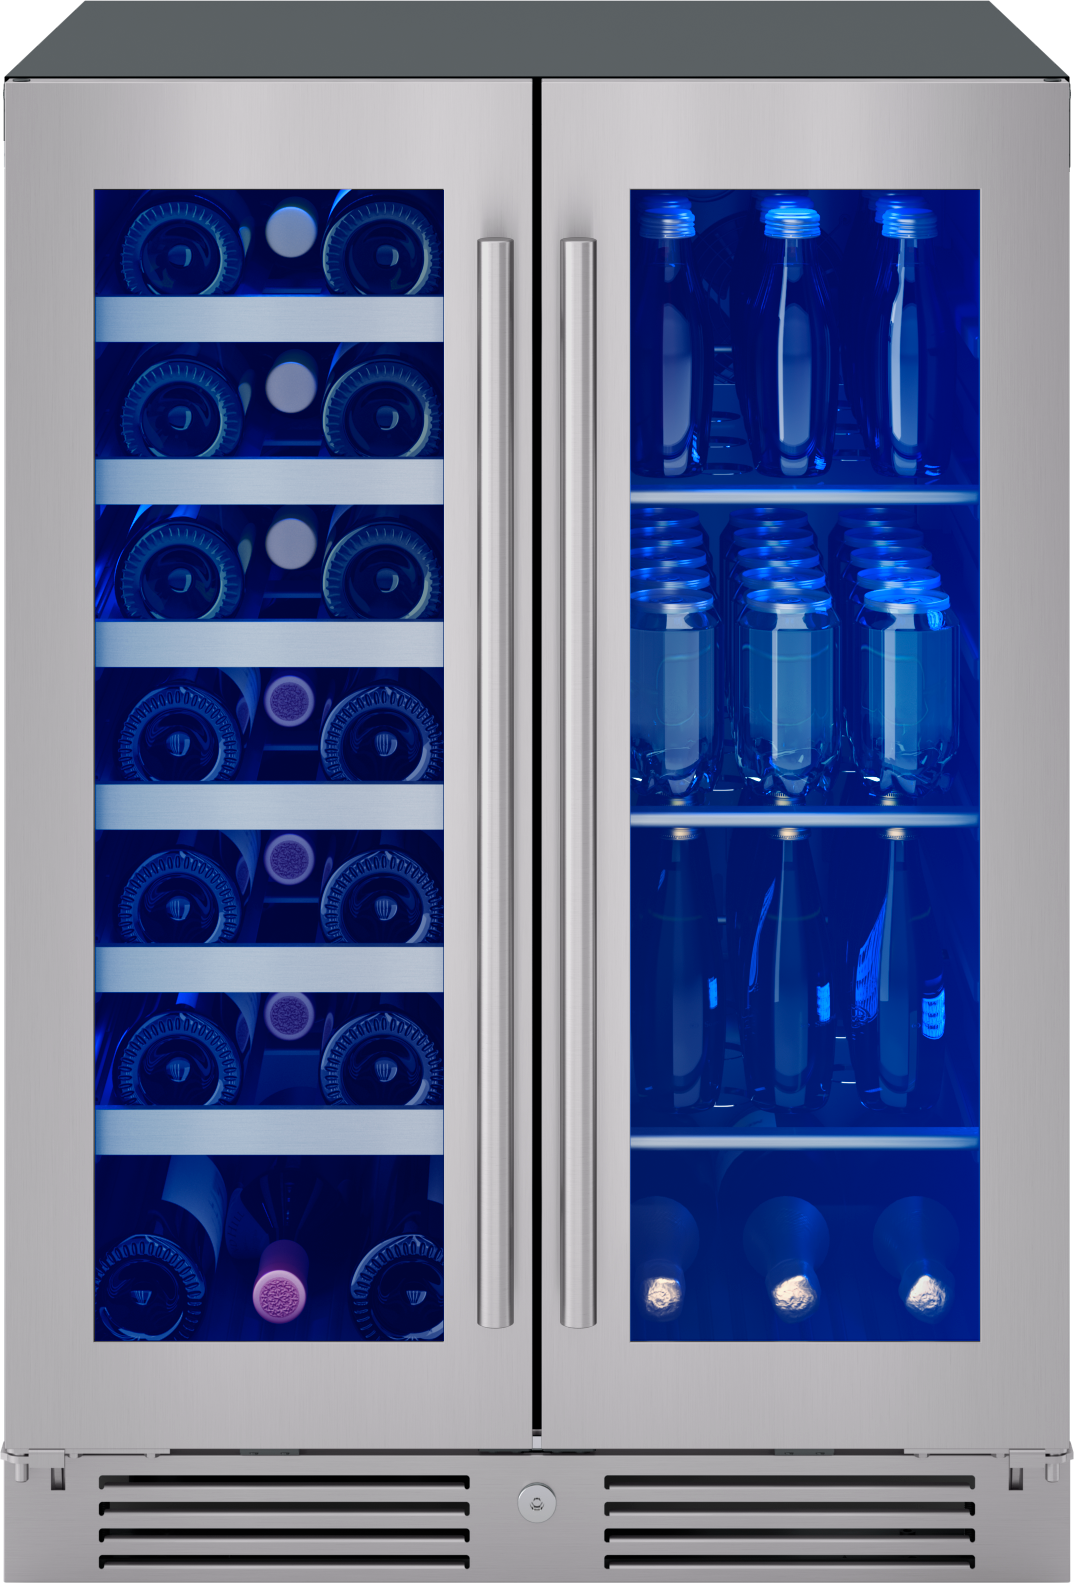 24"" Wine Cooler - Zephyr PRWB24C32CG